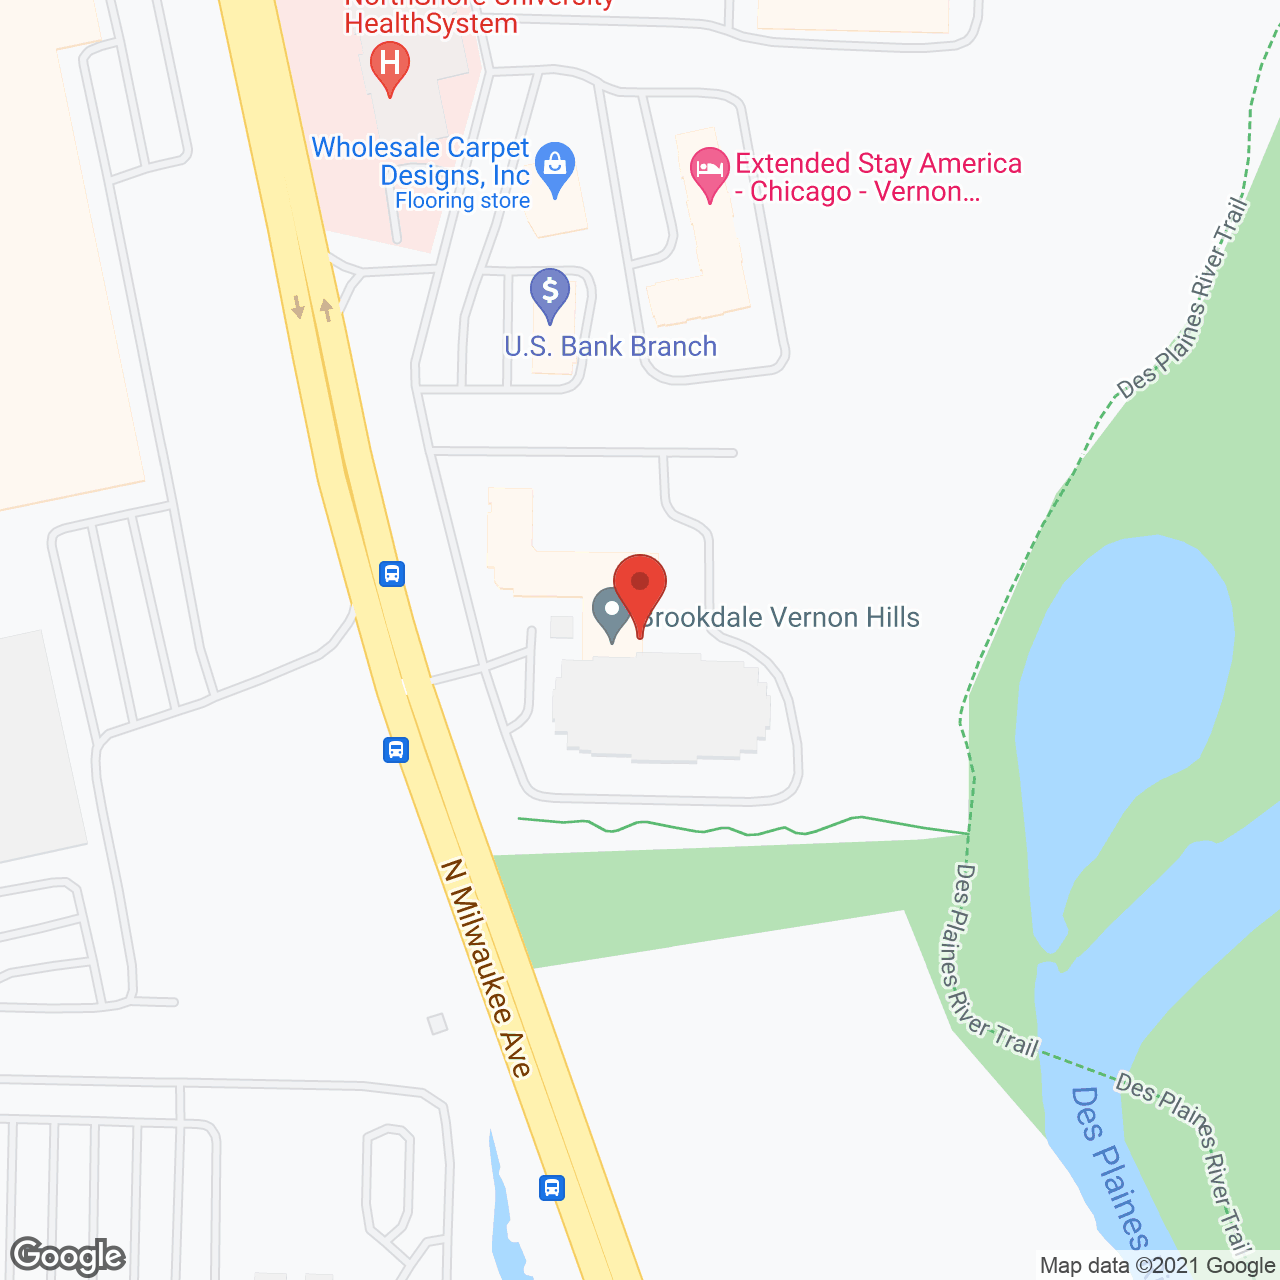 Brookdale Vernon Hills in google map